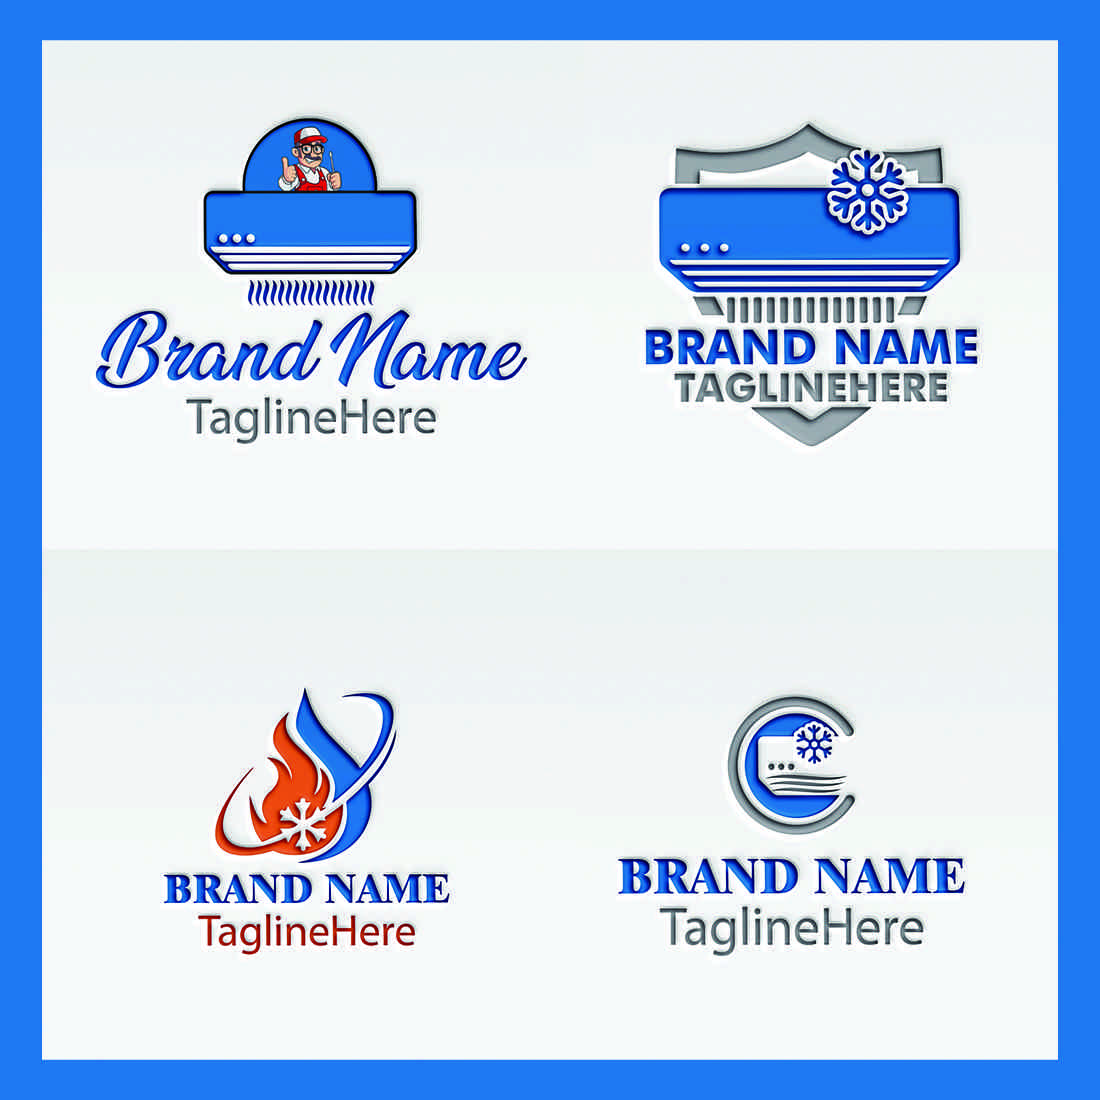 4 modern logo design for business cover image.